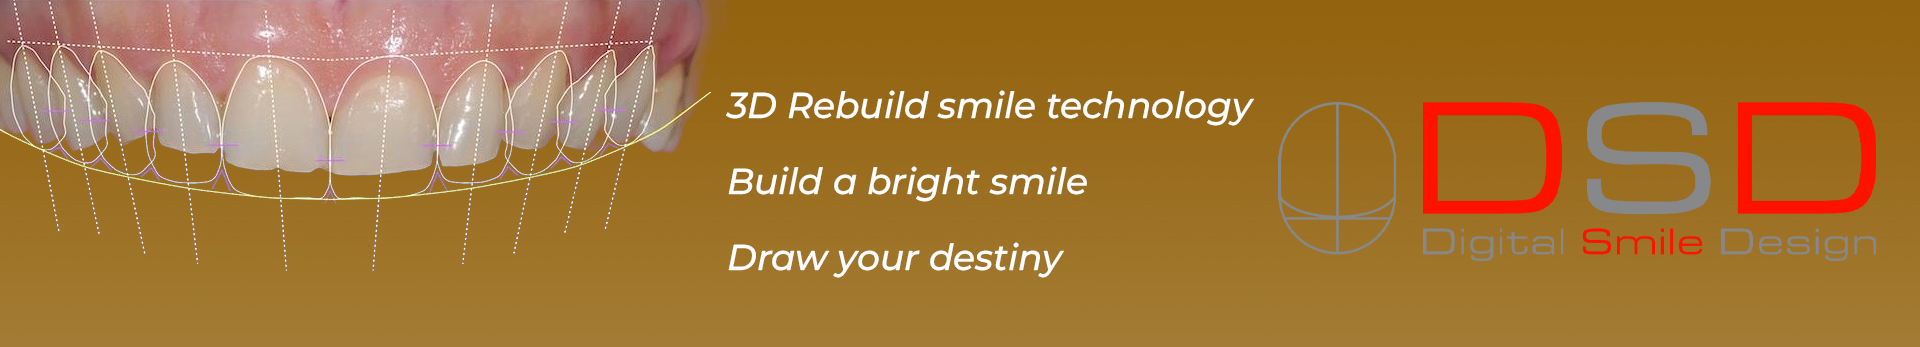 3D-rebuild-smile-technology